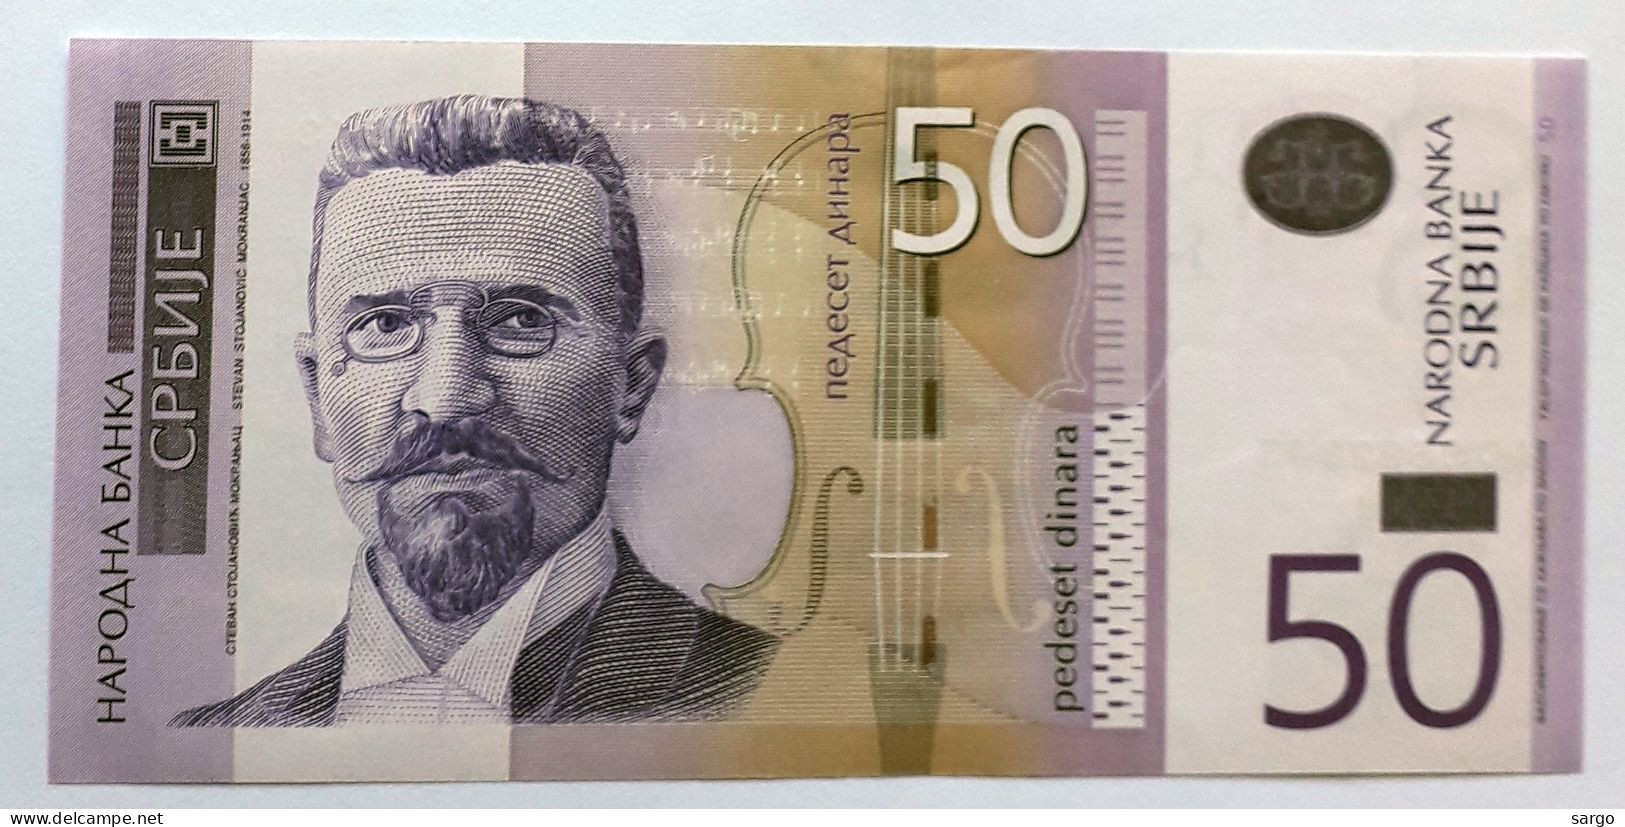 SERBIA - 50 DINARA  - P 40  (2005)  - UNC -  BANKNOTES - PAPER MONEY - CARTAMONETA - - Serbie